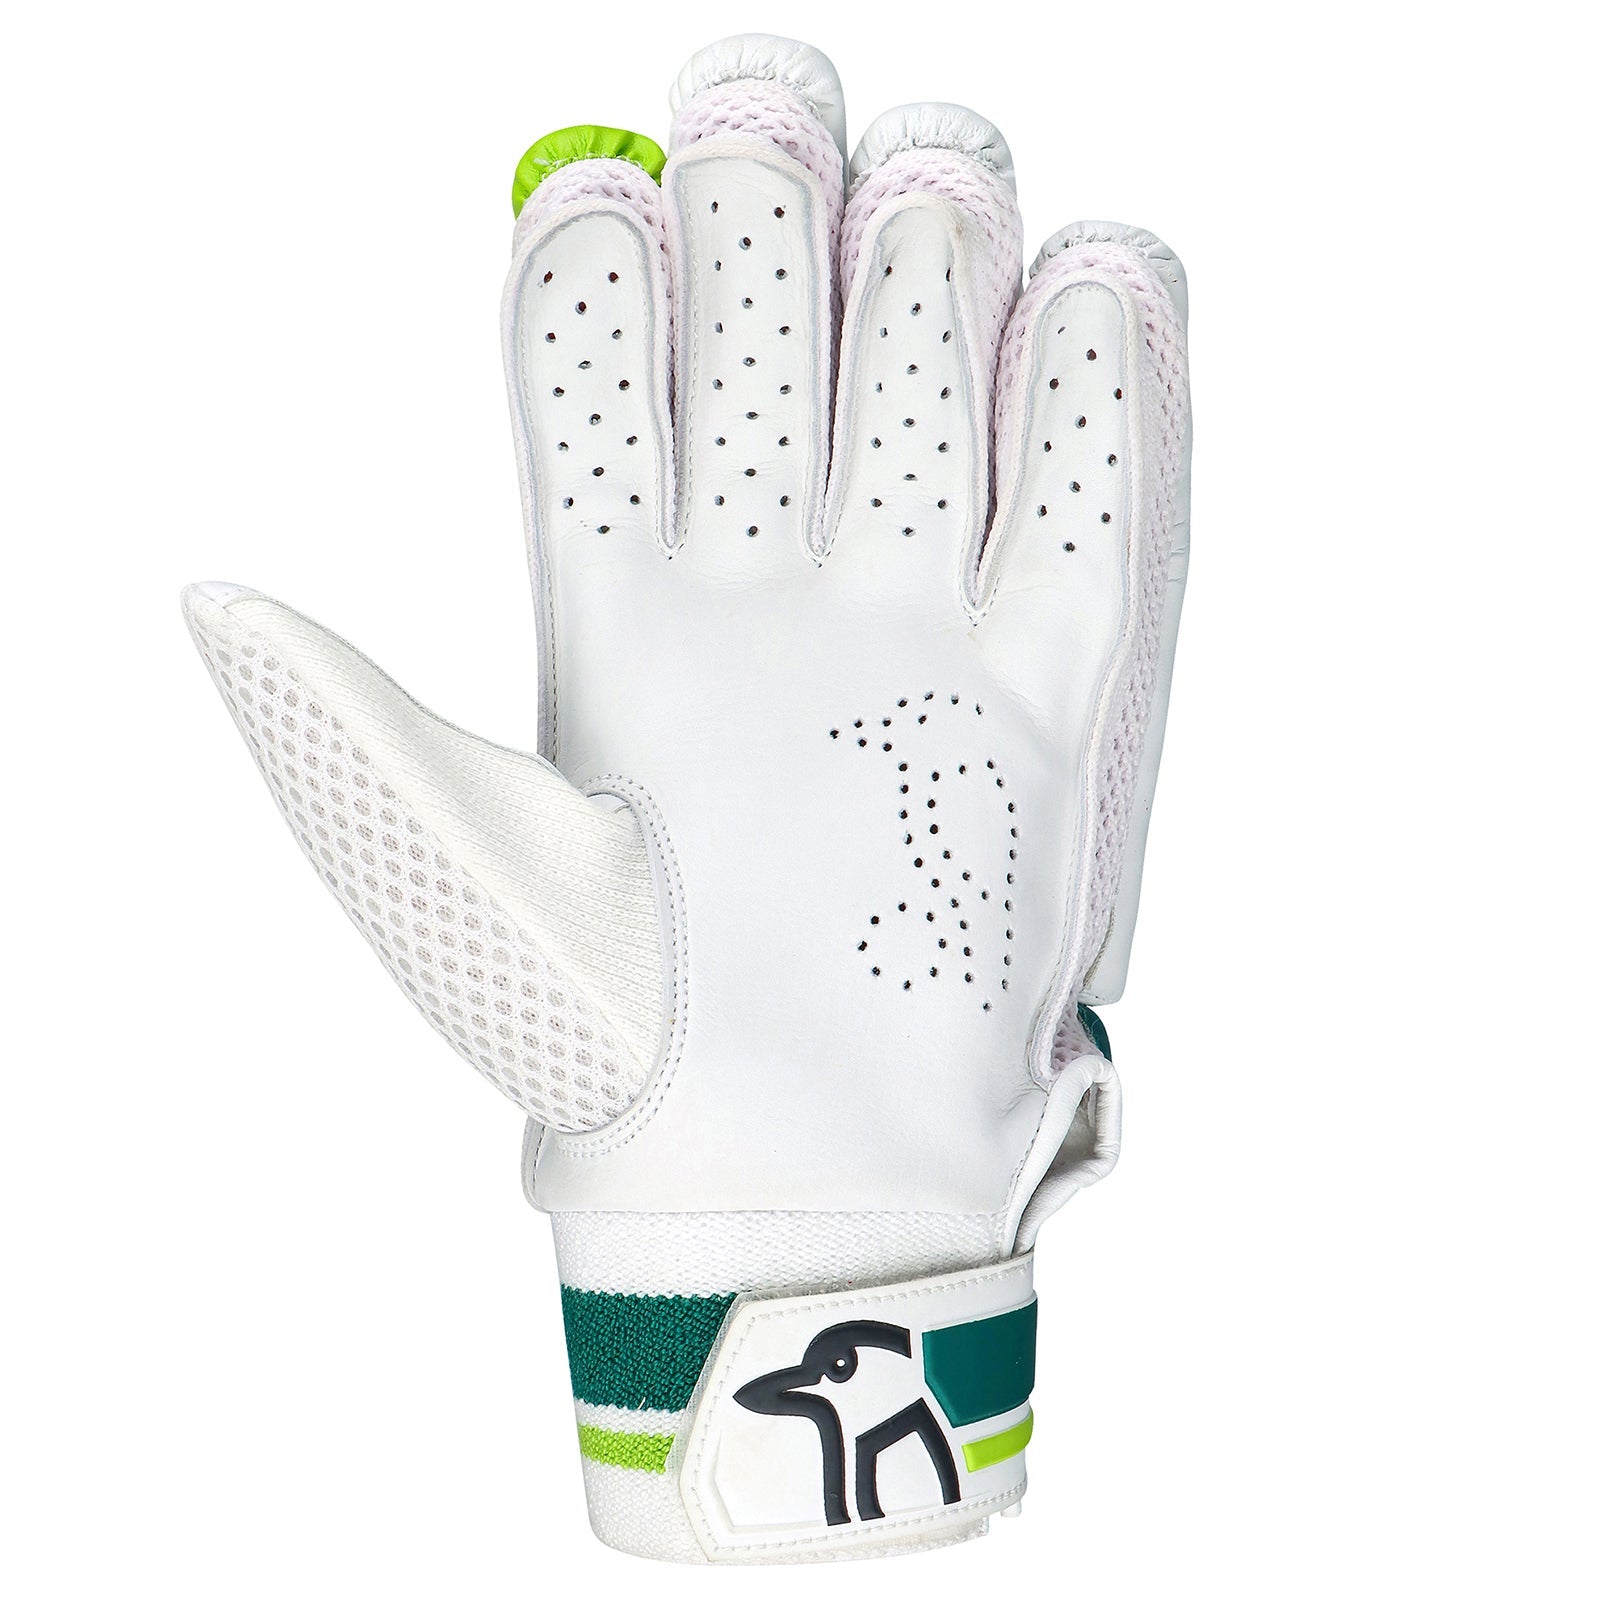 Kookaburra Kahuna Pro 8.0 Batting Gloves - Small Junior